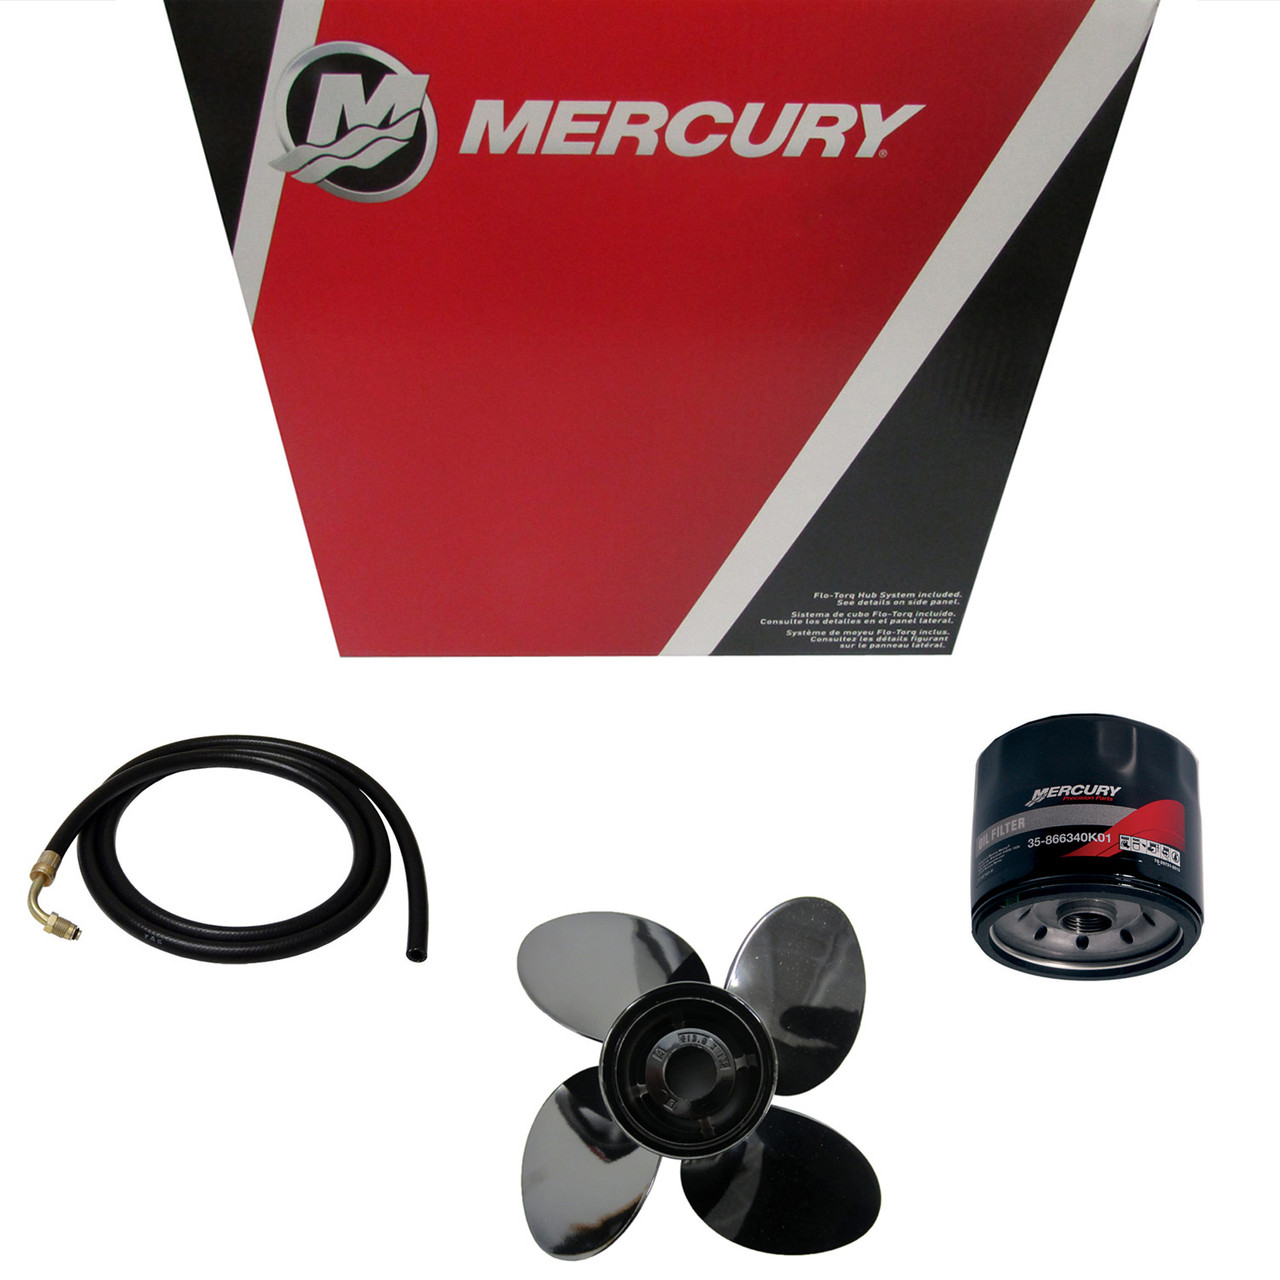 Mercury Marine / Mercruiser New OEM Repair Kit-Carb, 879194026